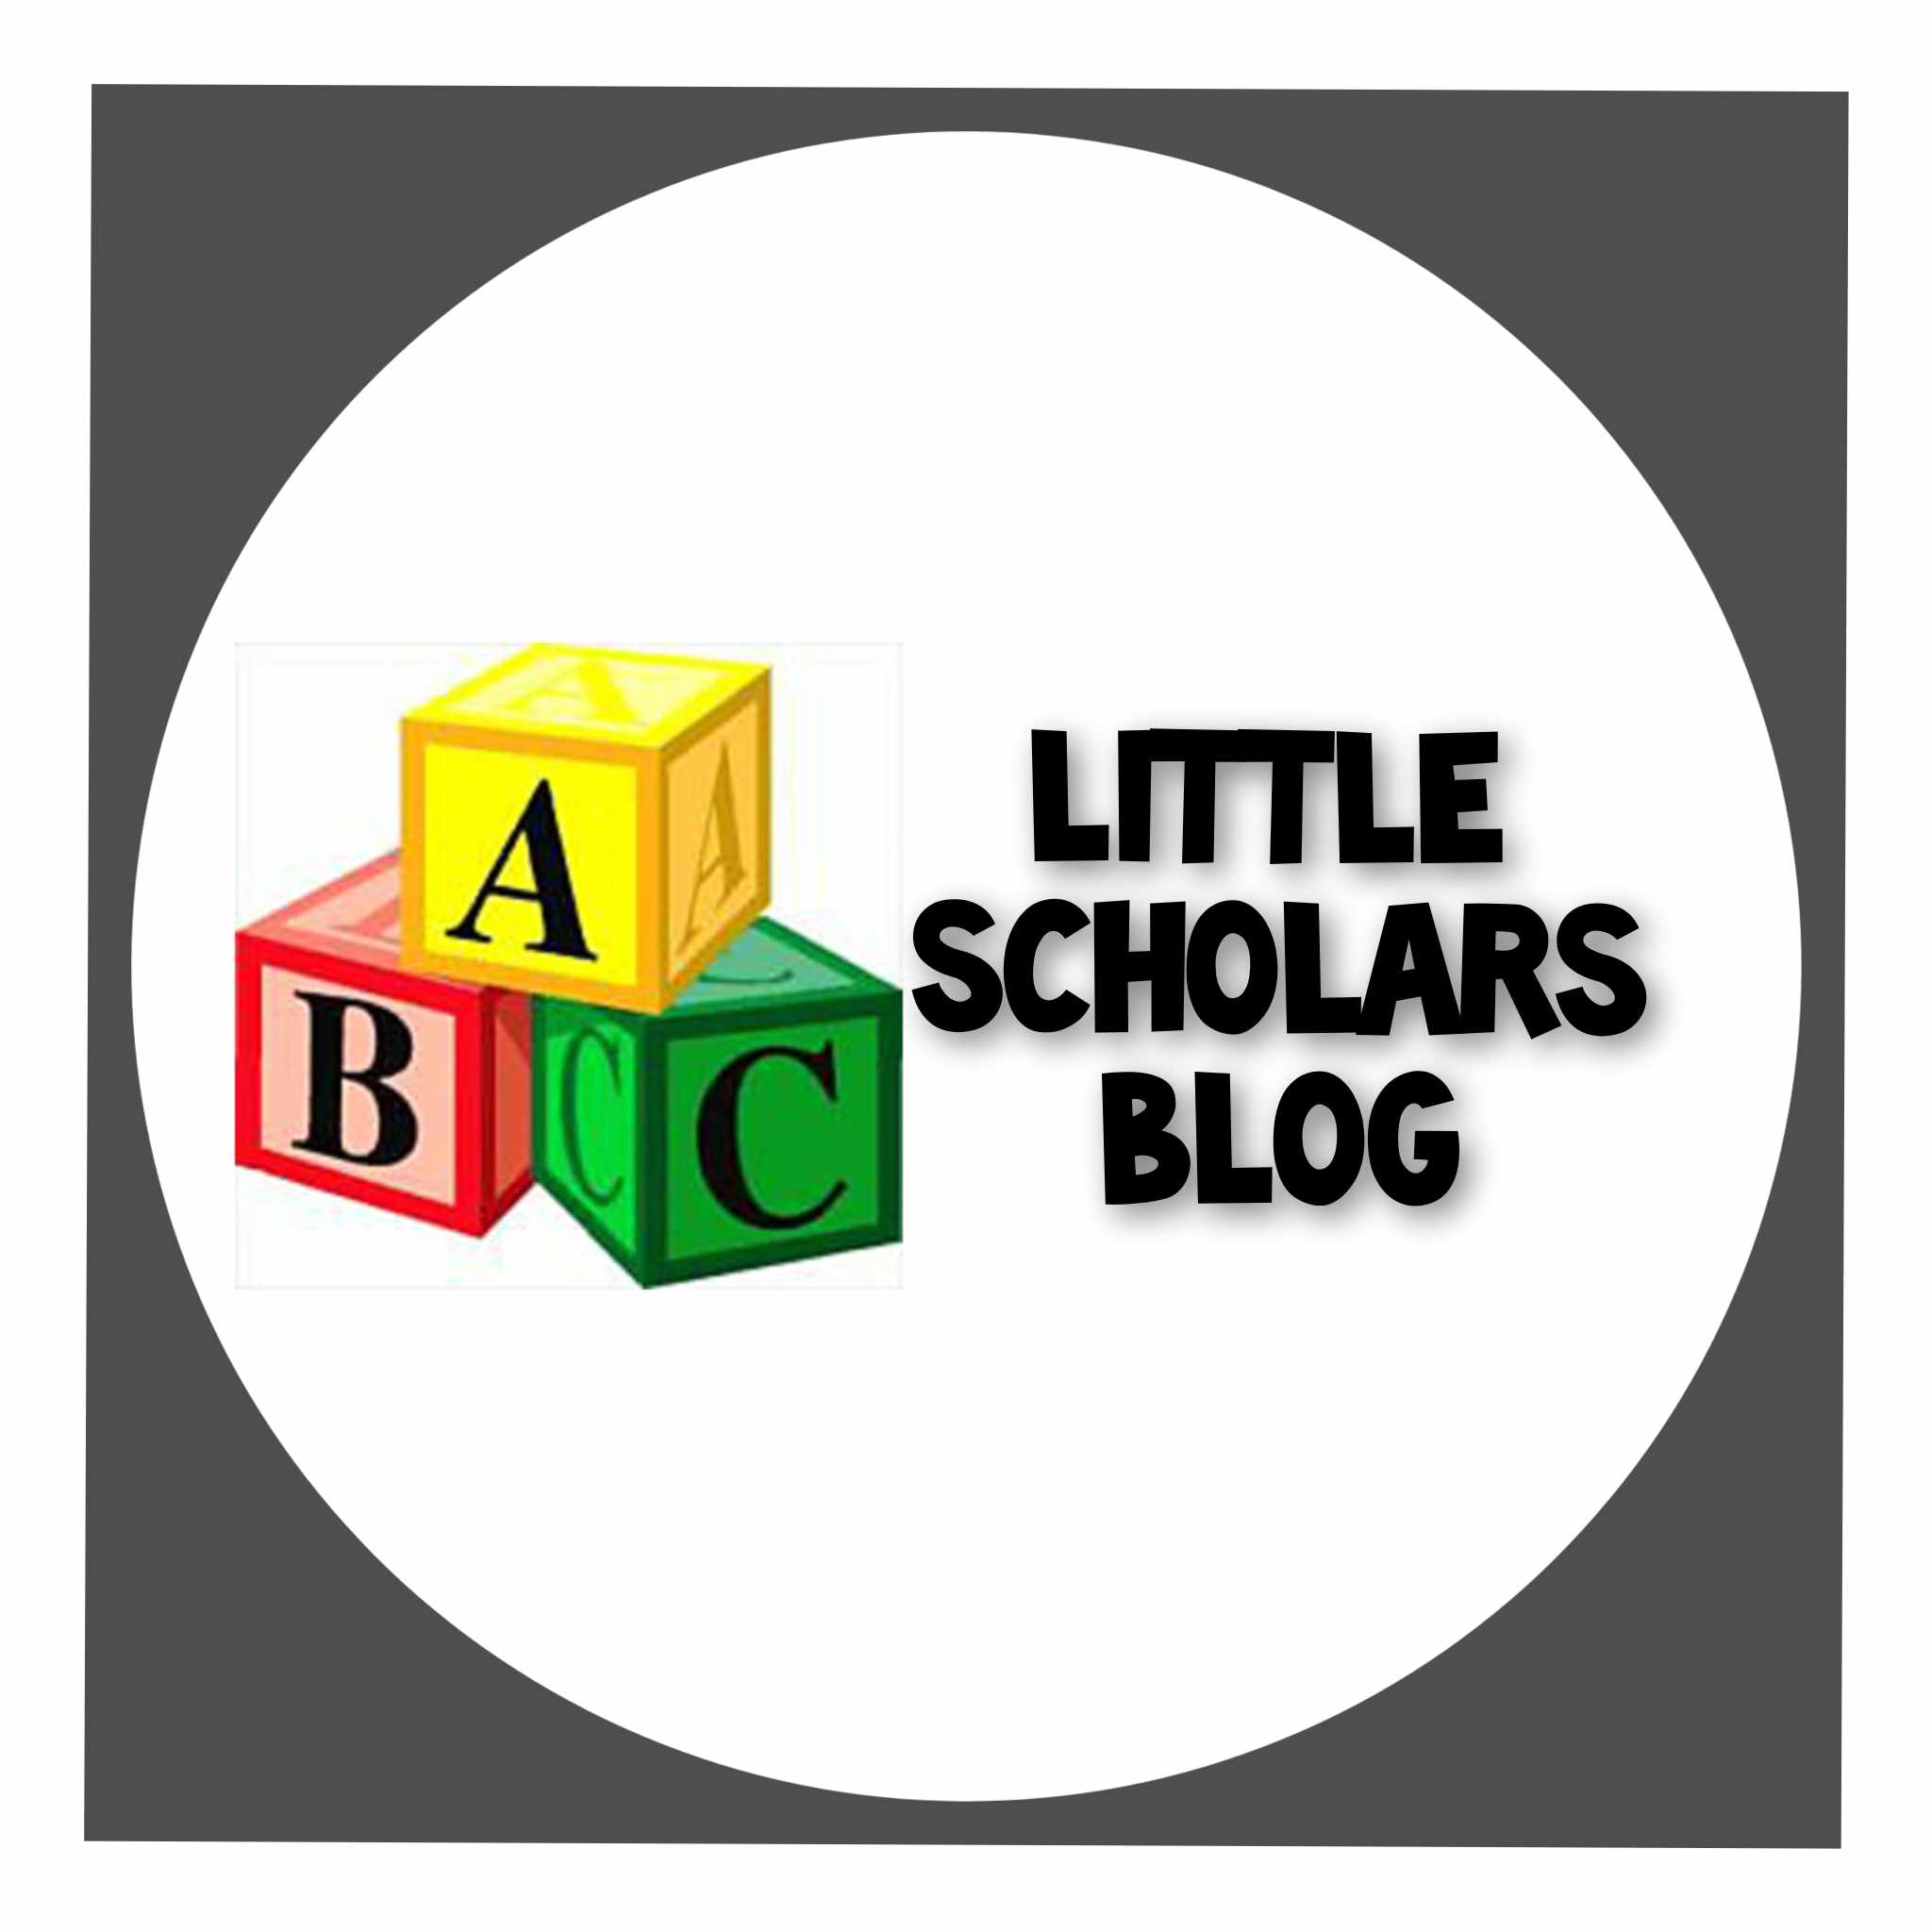 Little Scholars Blog